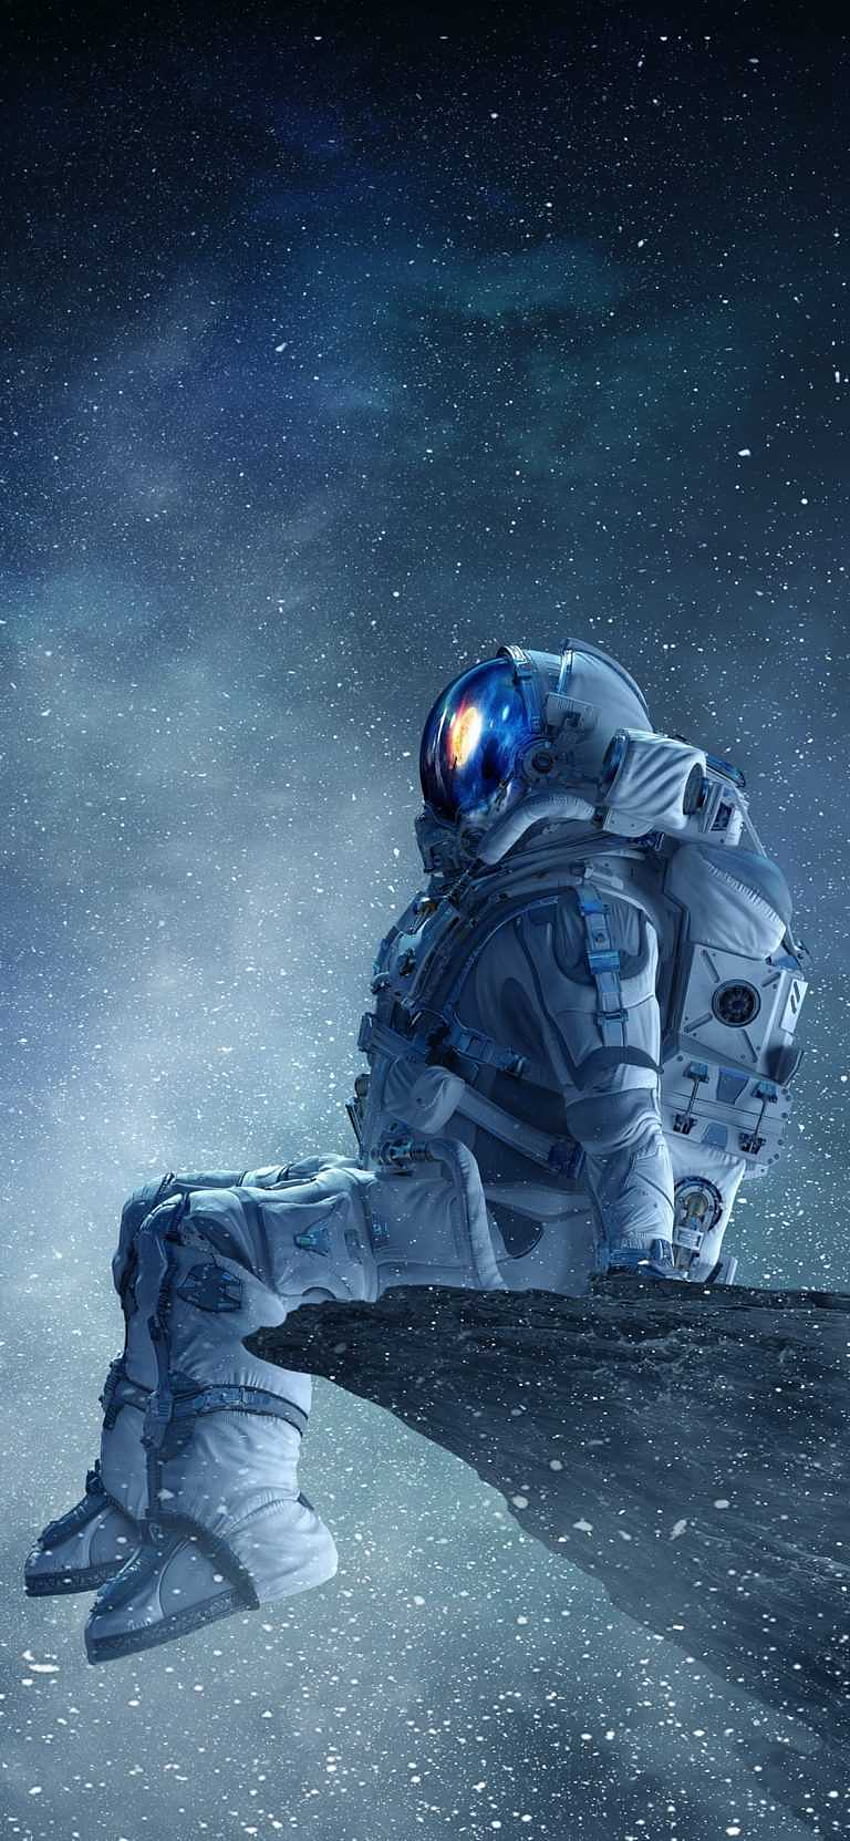 Astronaut Wallpaper 4K Galaxy Space suit Dream 8085